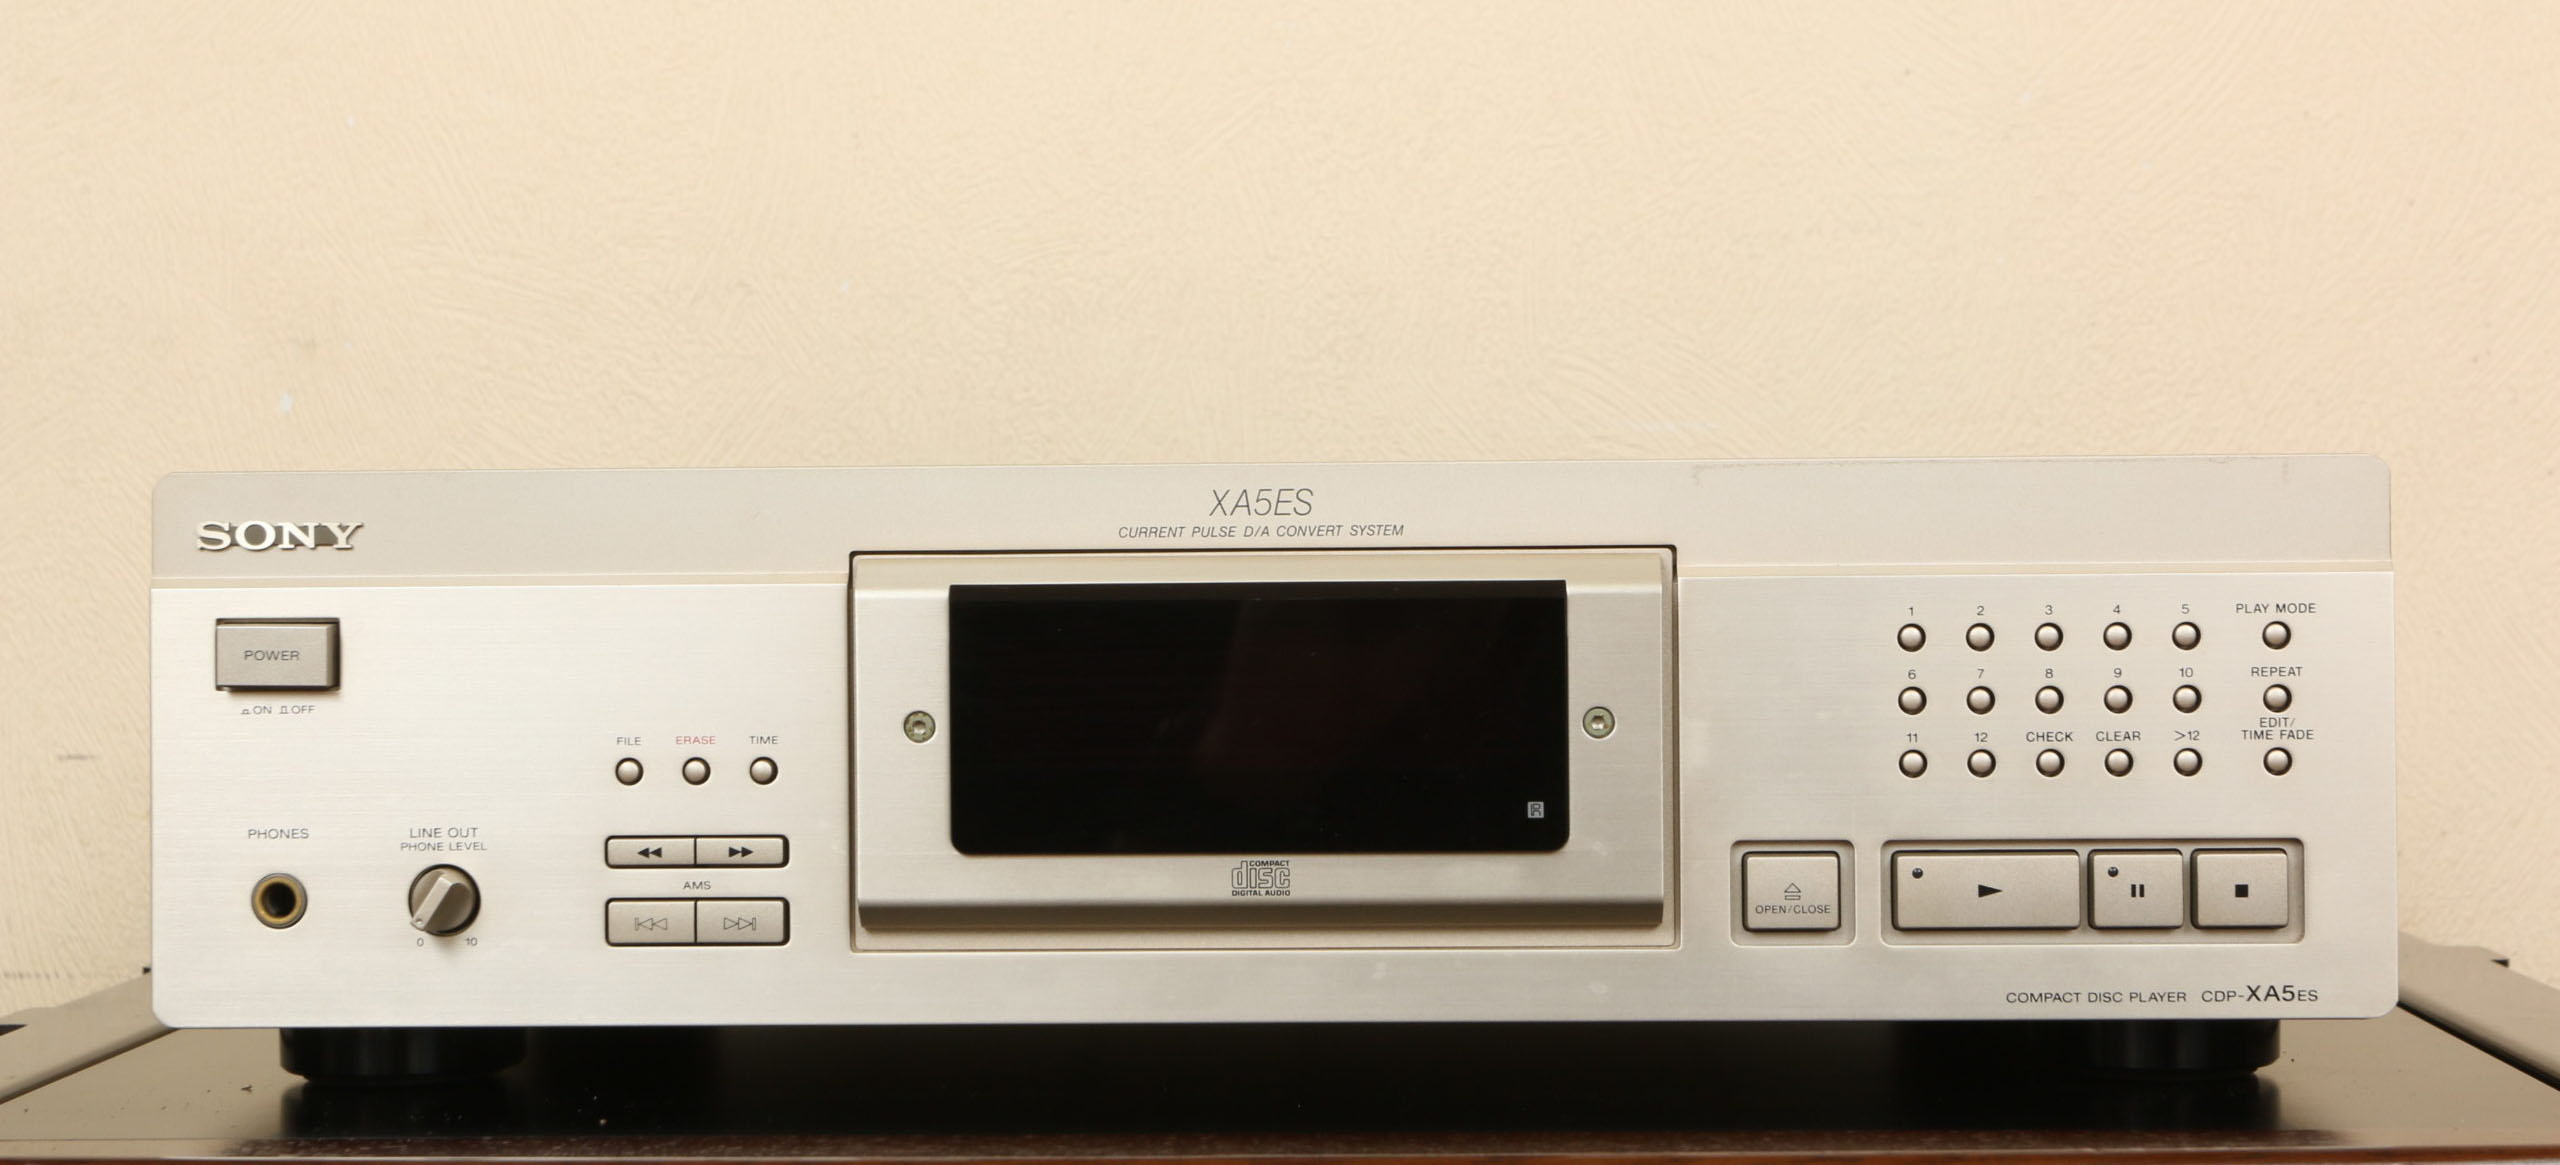 Sony CDP-XA5ES CD Players